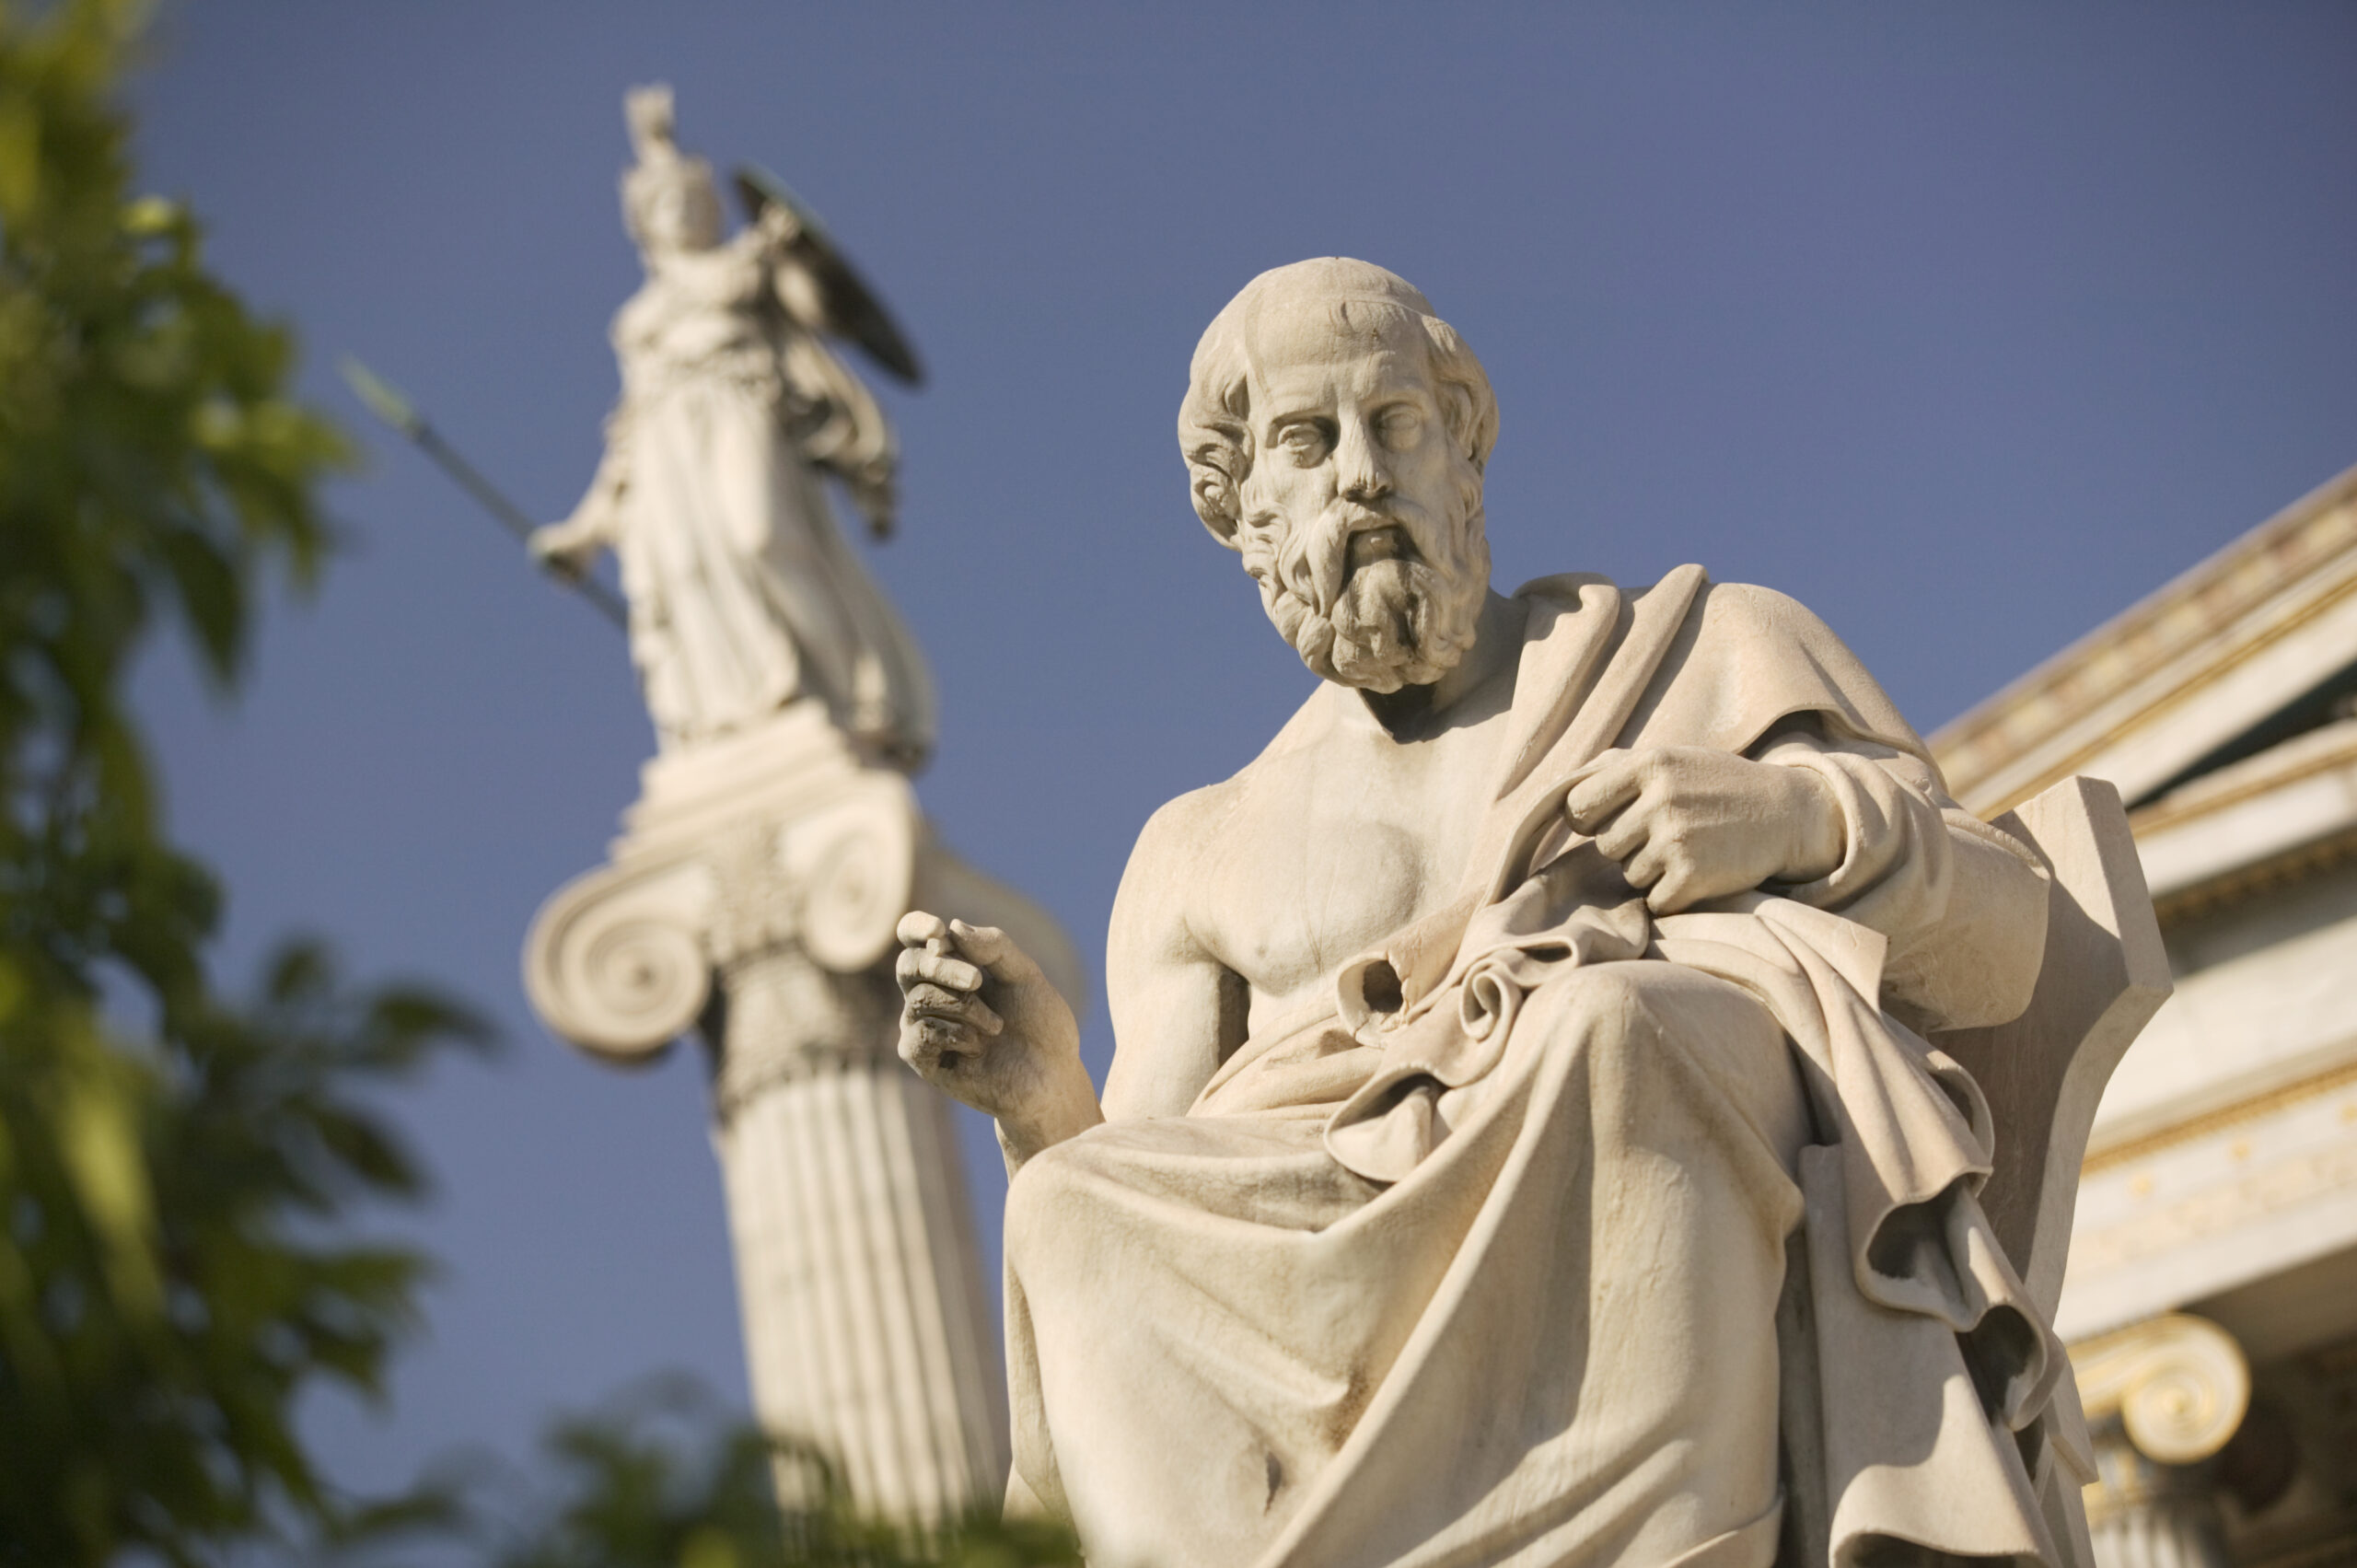 Plato Statue Outside the Hellenic Academy